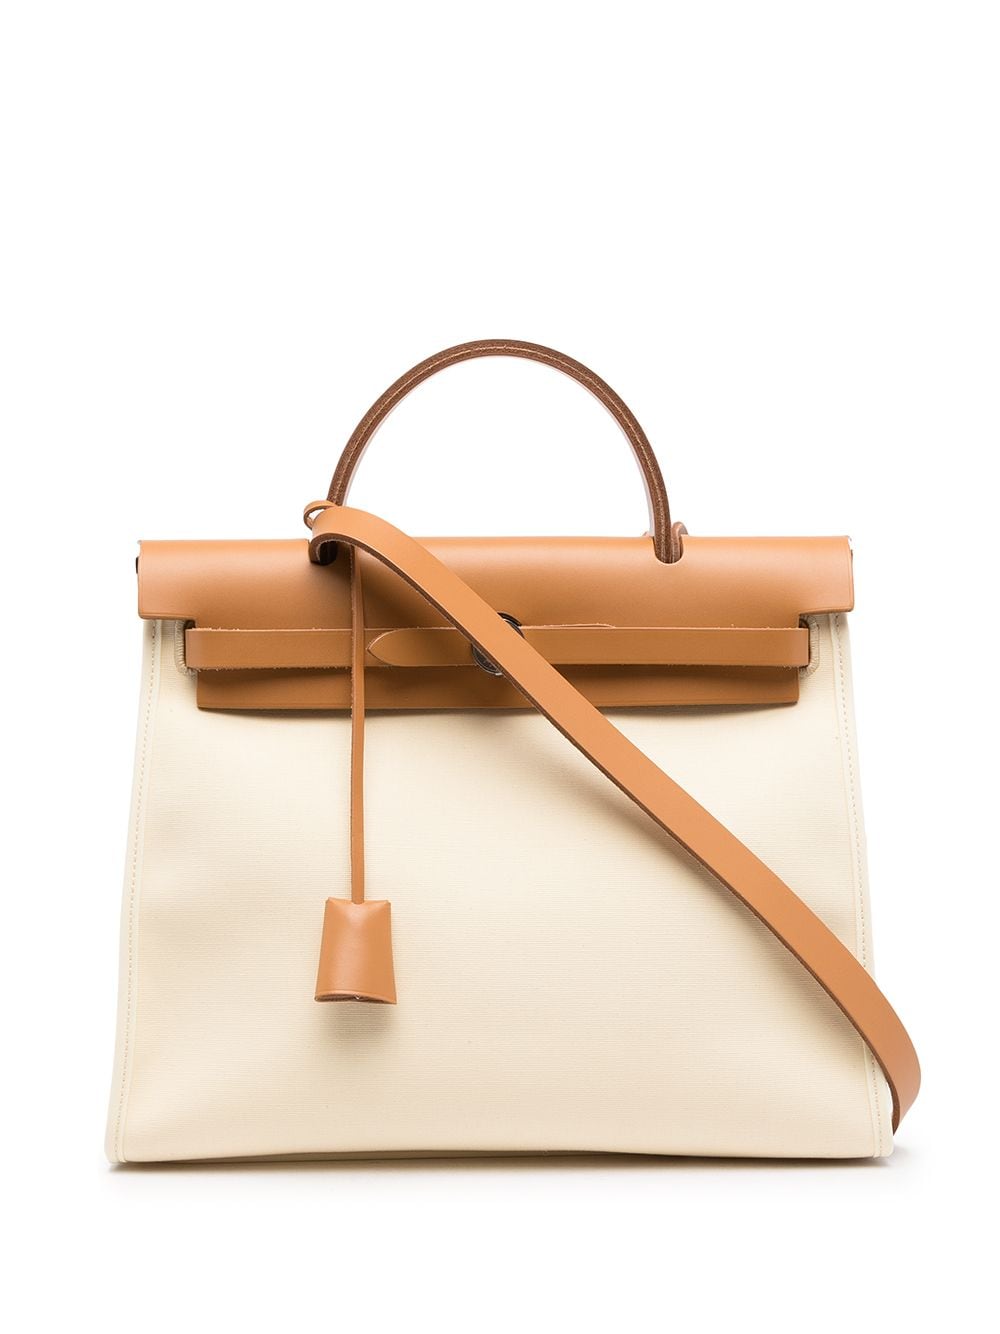 фото Hermès сумка her bag zip 31 2019-го года